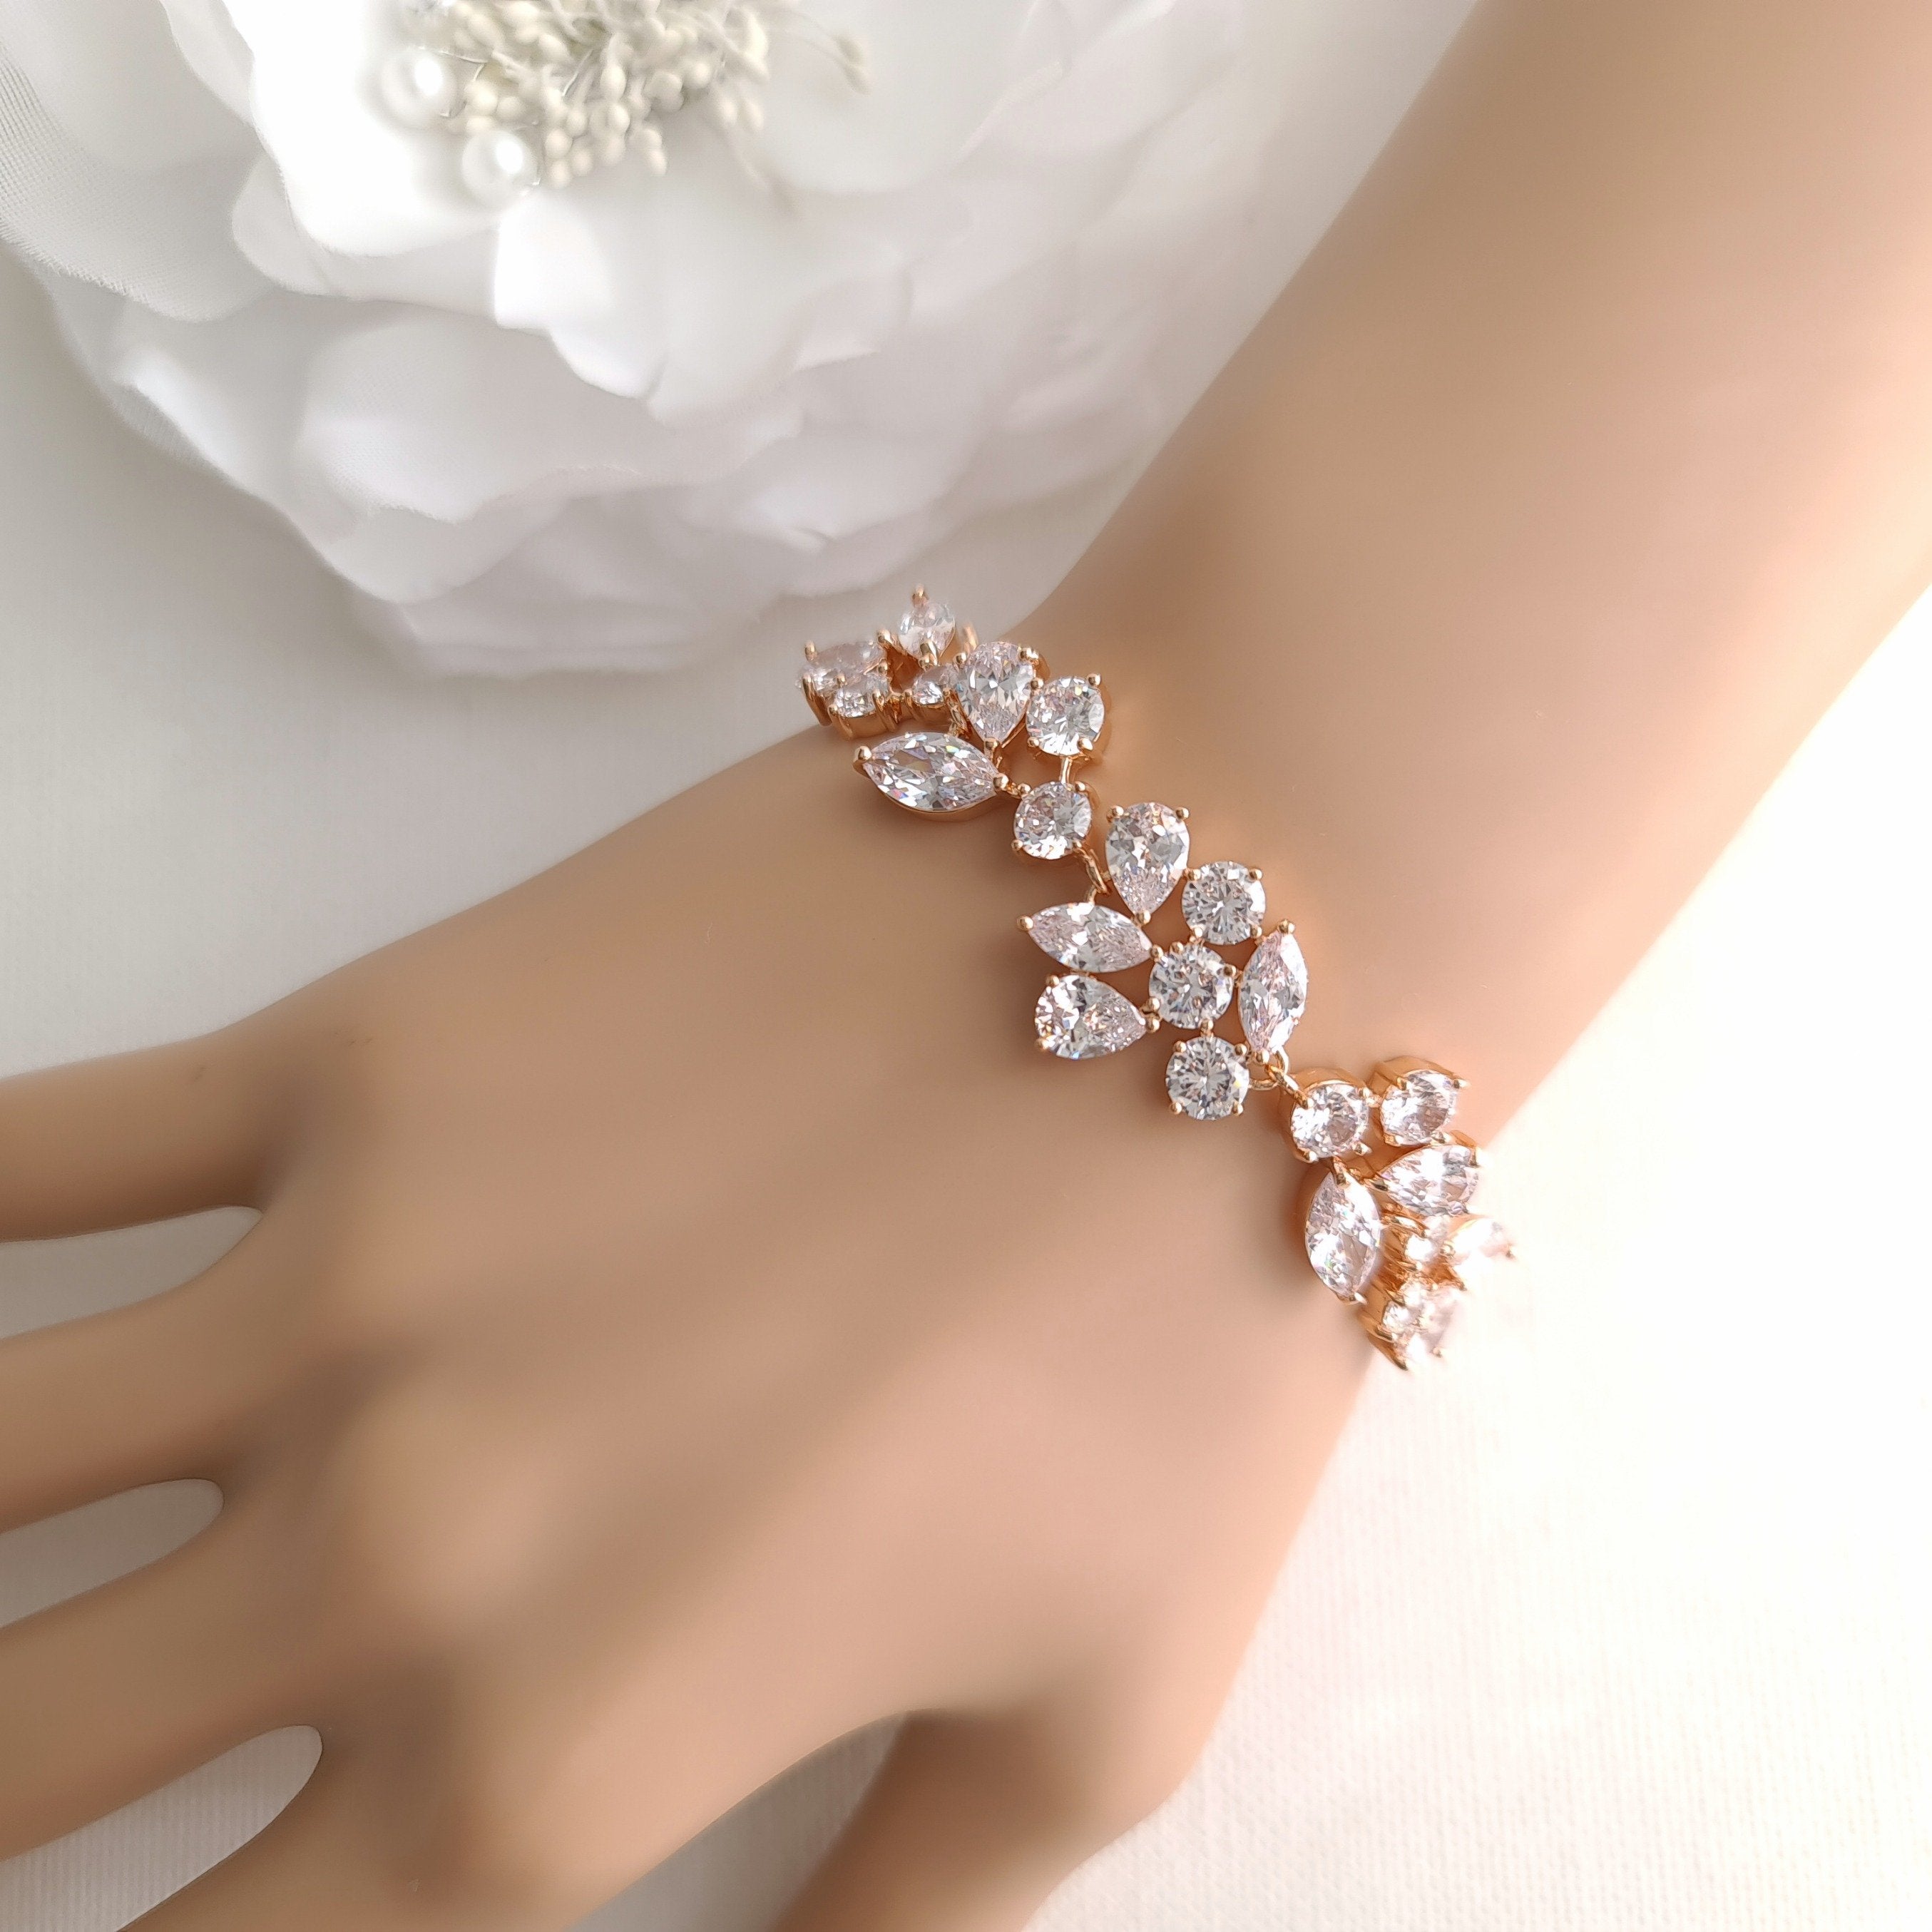 Gold-Toned Kundan & Pearls Ring Bracelet, Hand harness – VitansEthnics